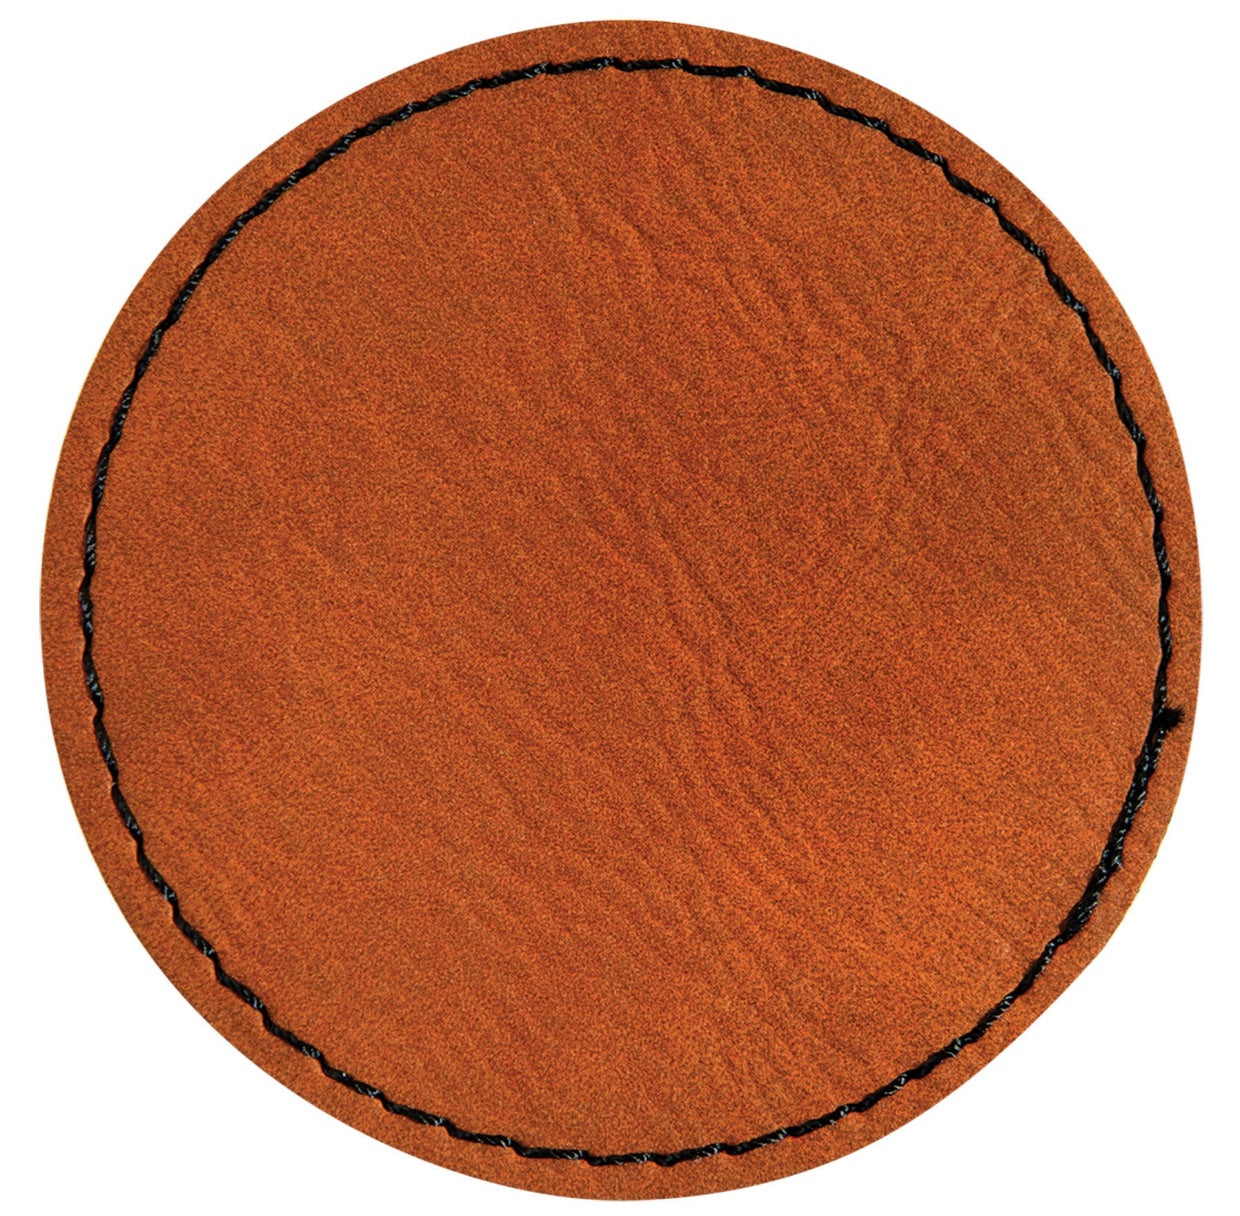 Circular custom leather patch